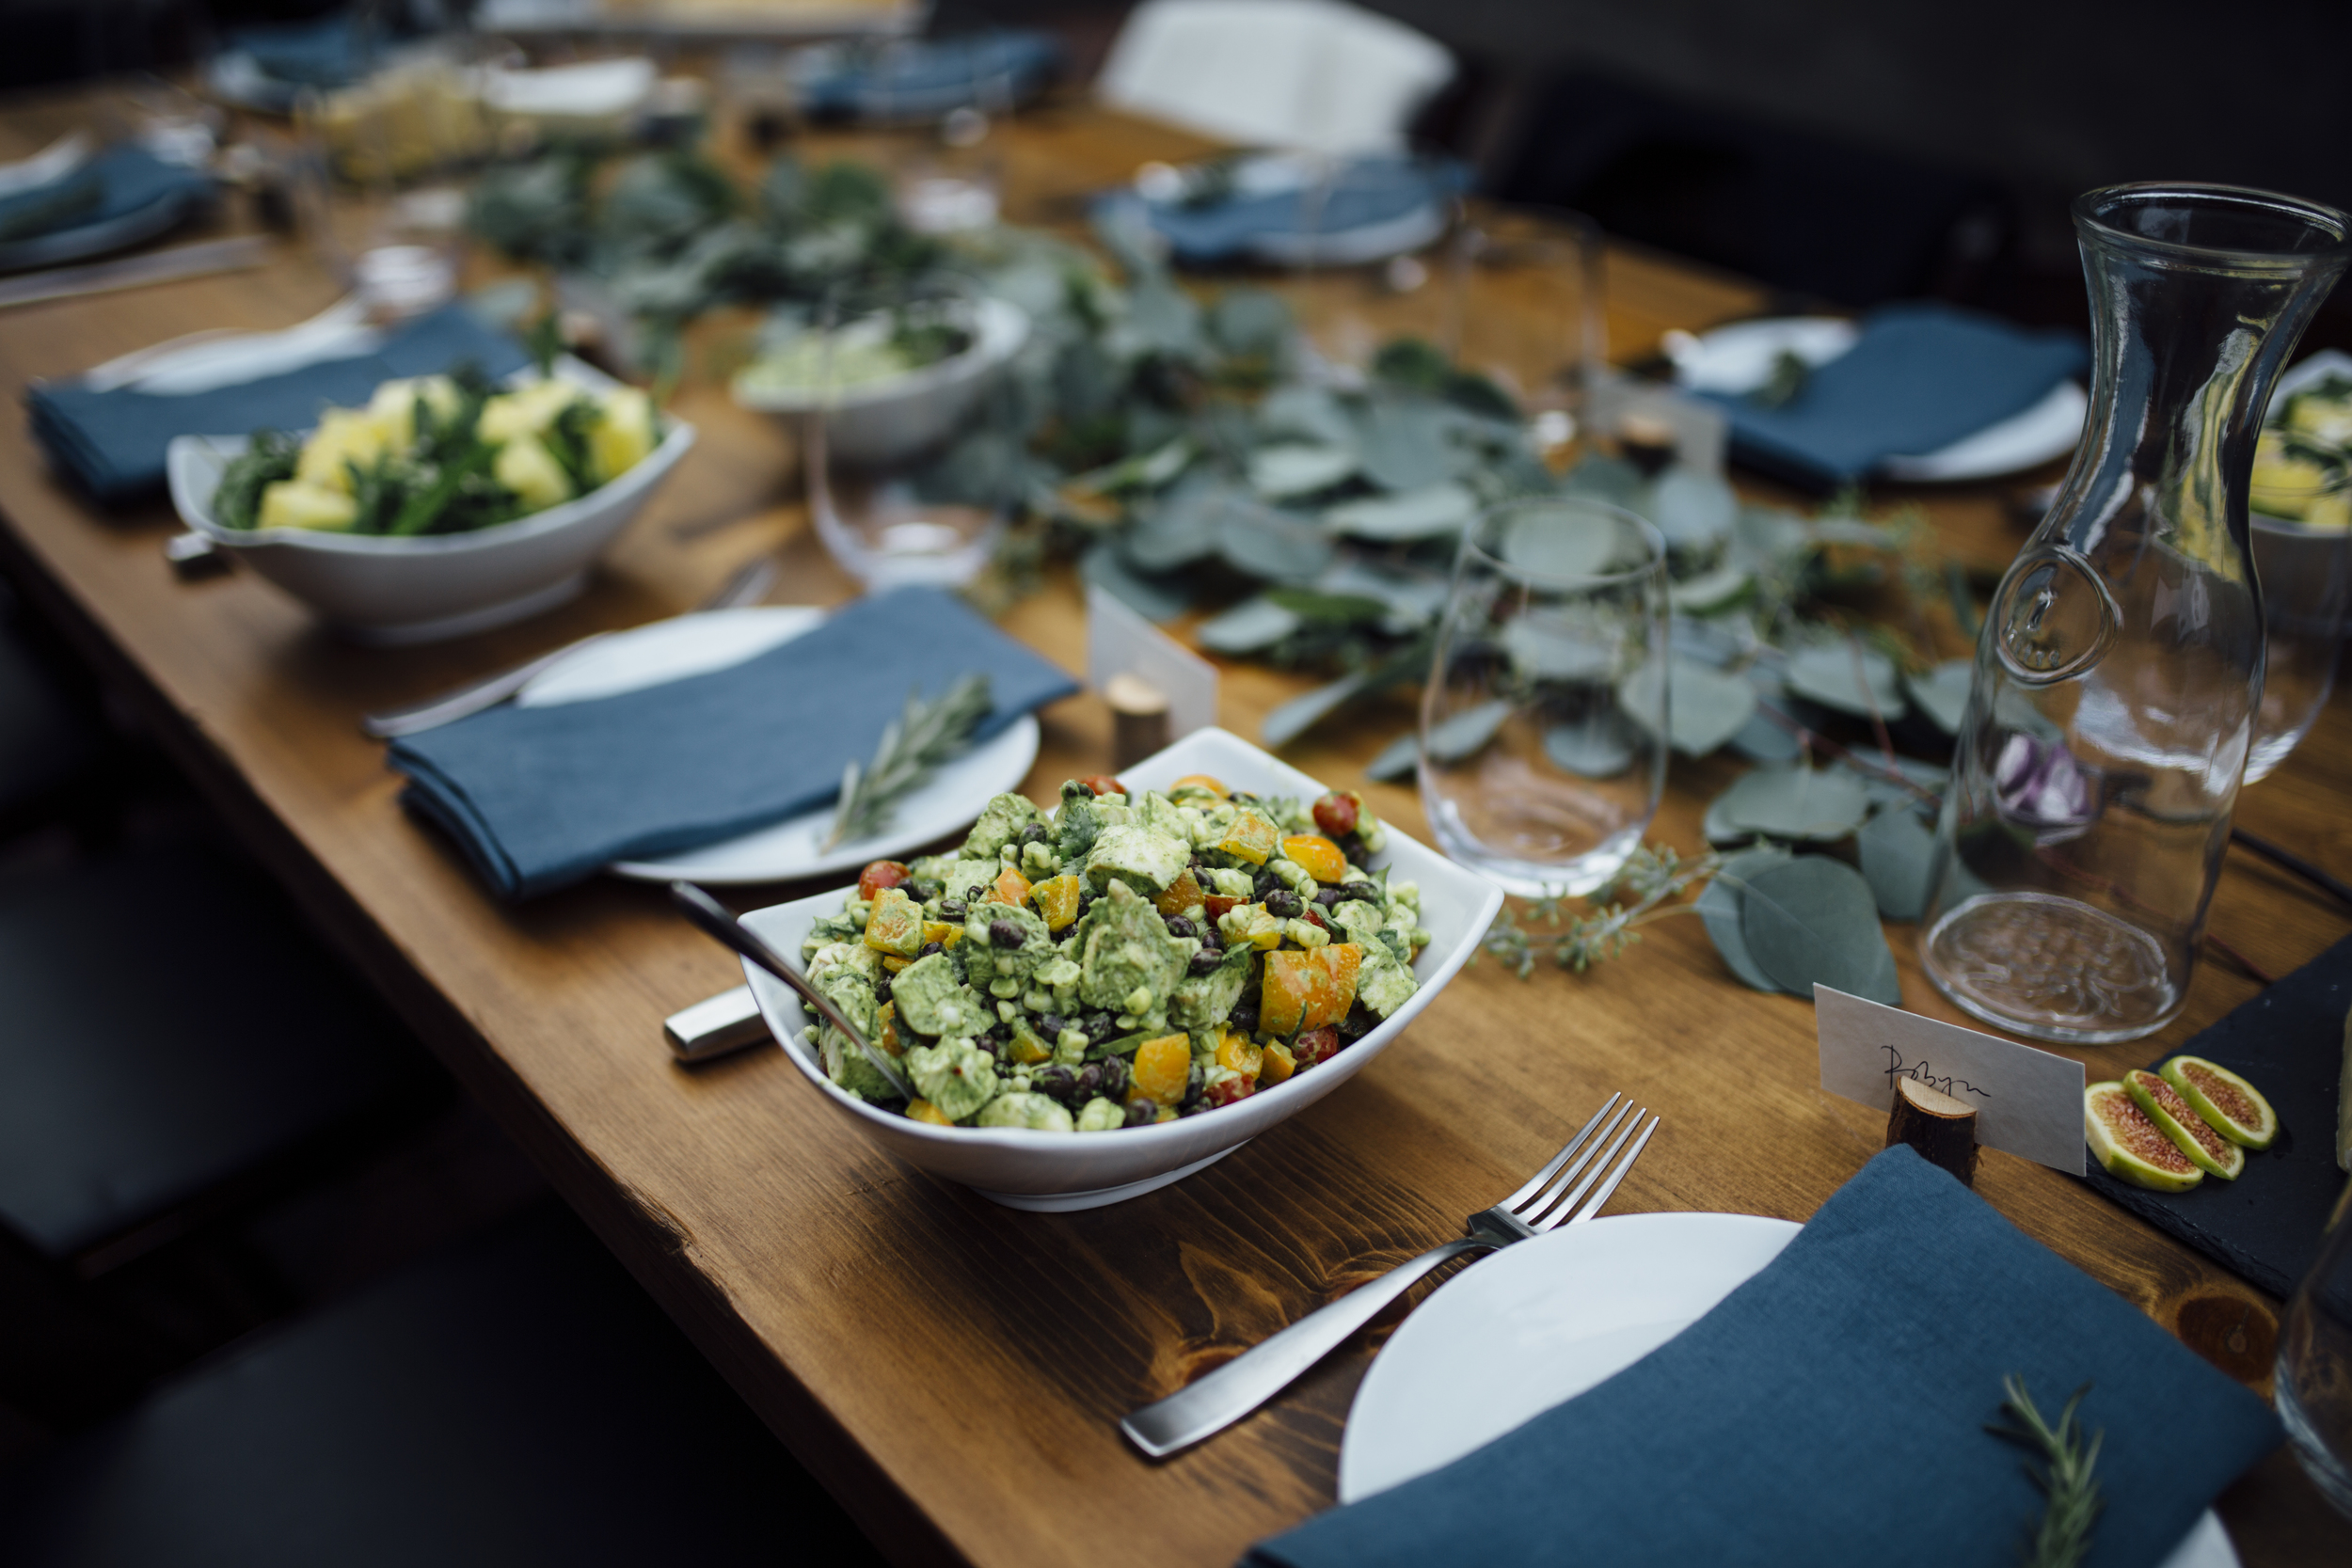  Intimate Backyard Dinner Party | Styled Shoot | Nataly Zigdon Photography | San Francisco 